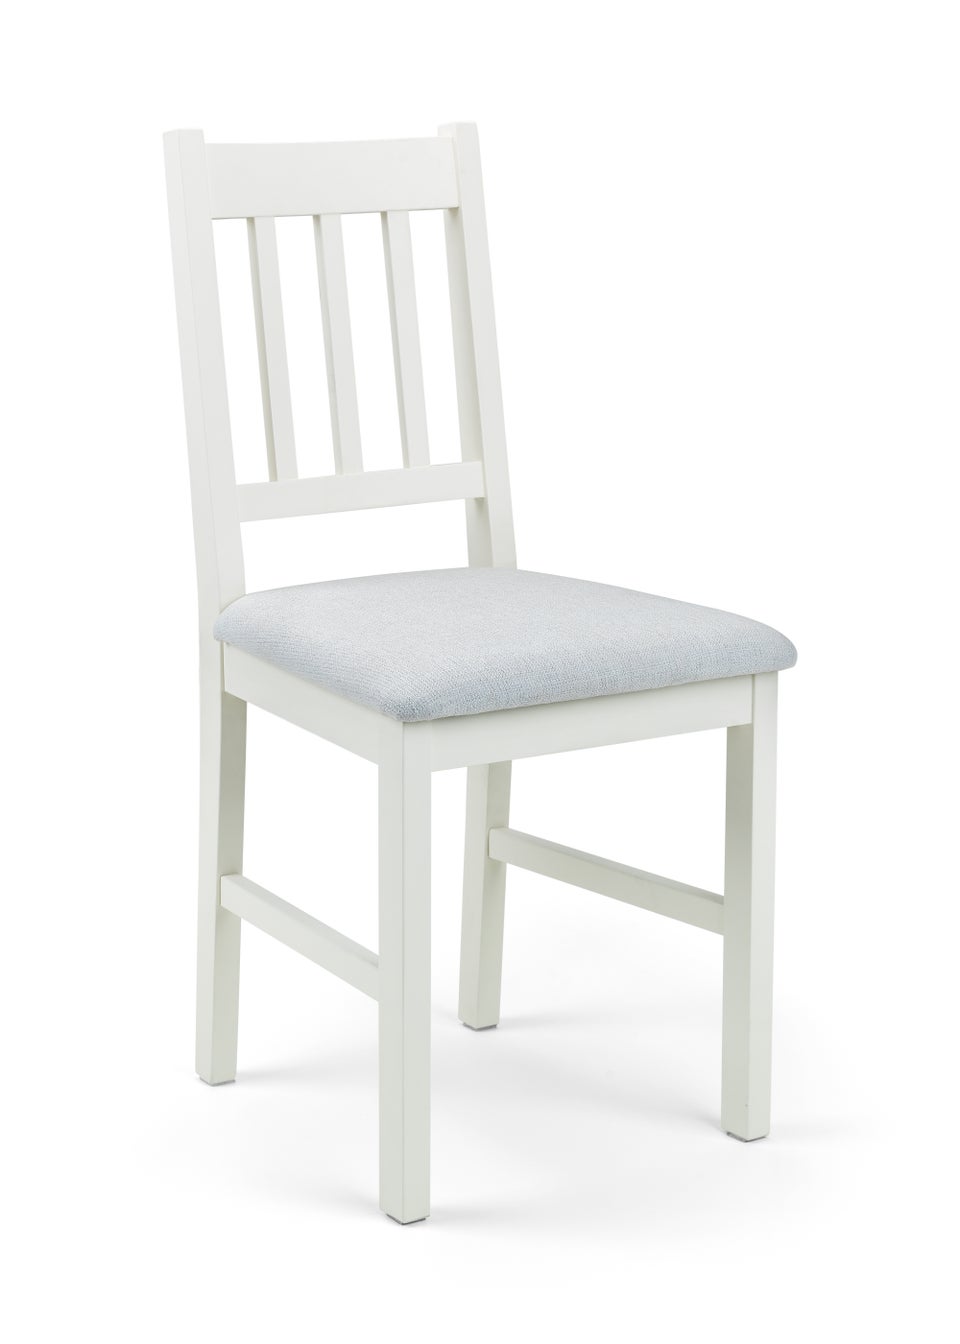 Julian Bowen Set Of 2 Coxmoor Dining Chairs (90 x 43 x 40 cm)